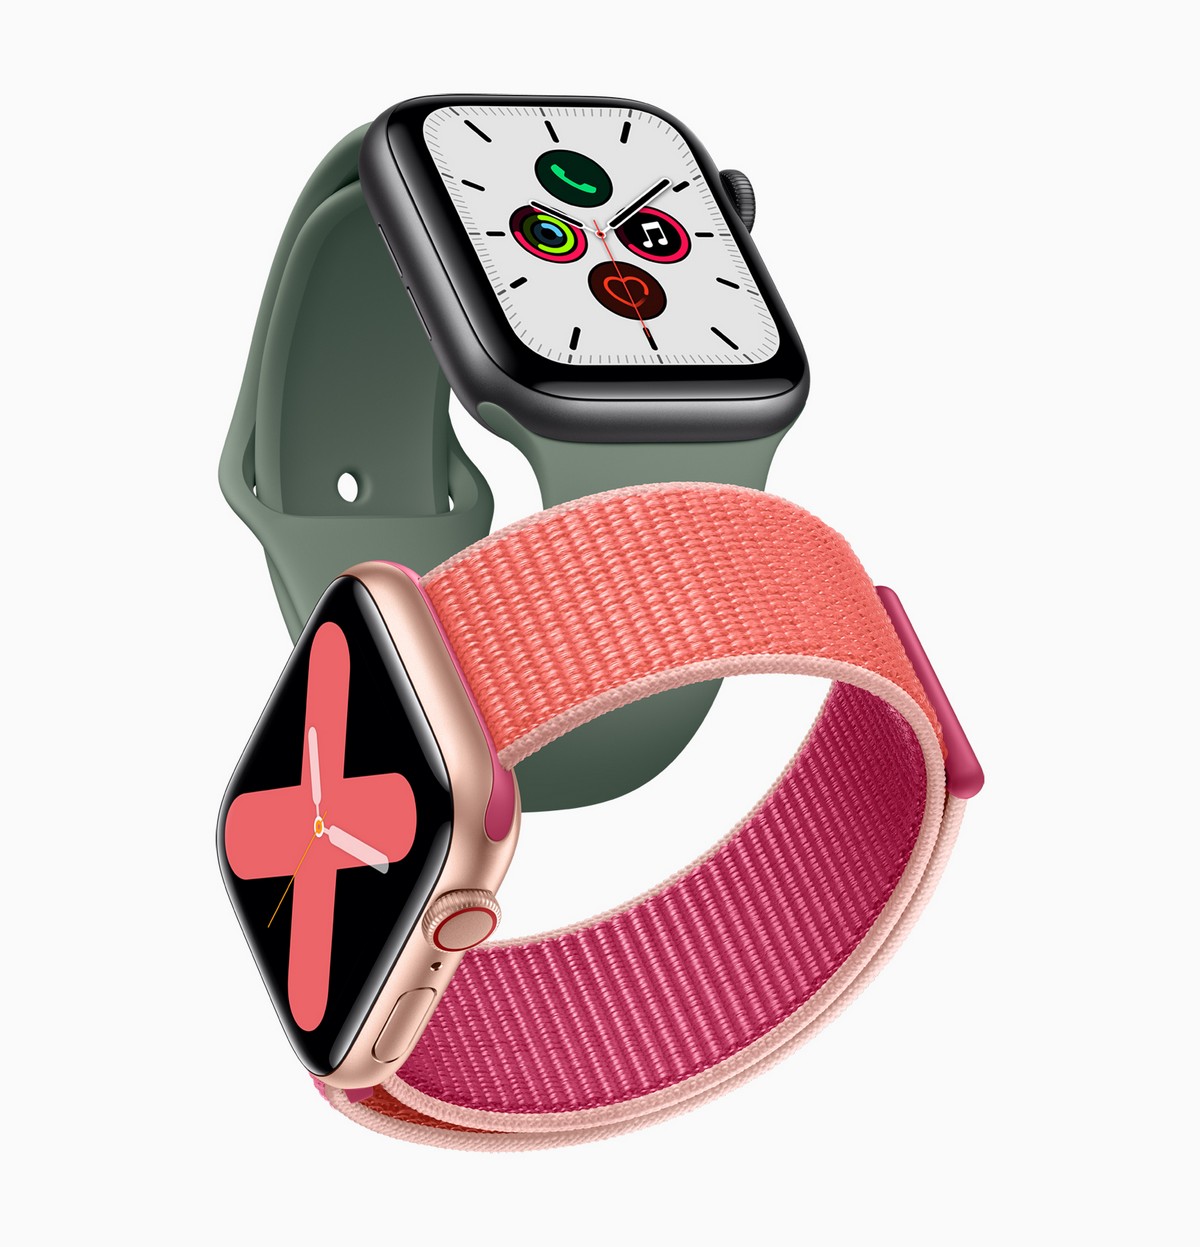 Apple Watch Series 1, Series 2 Will Not Receive The watchOS 7 Update